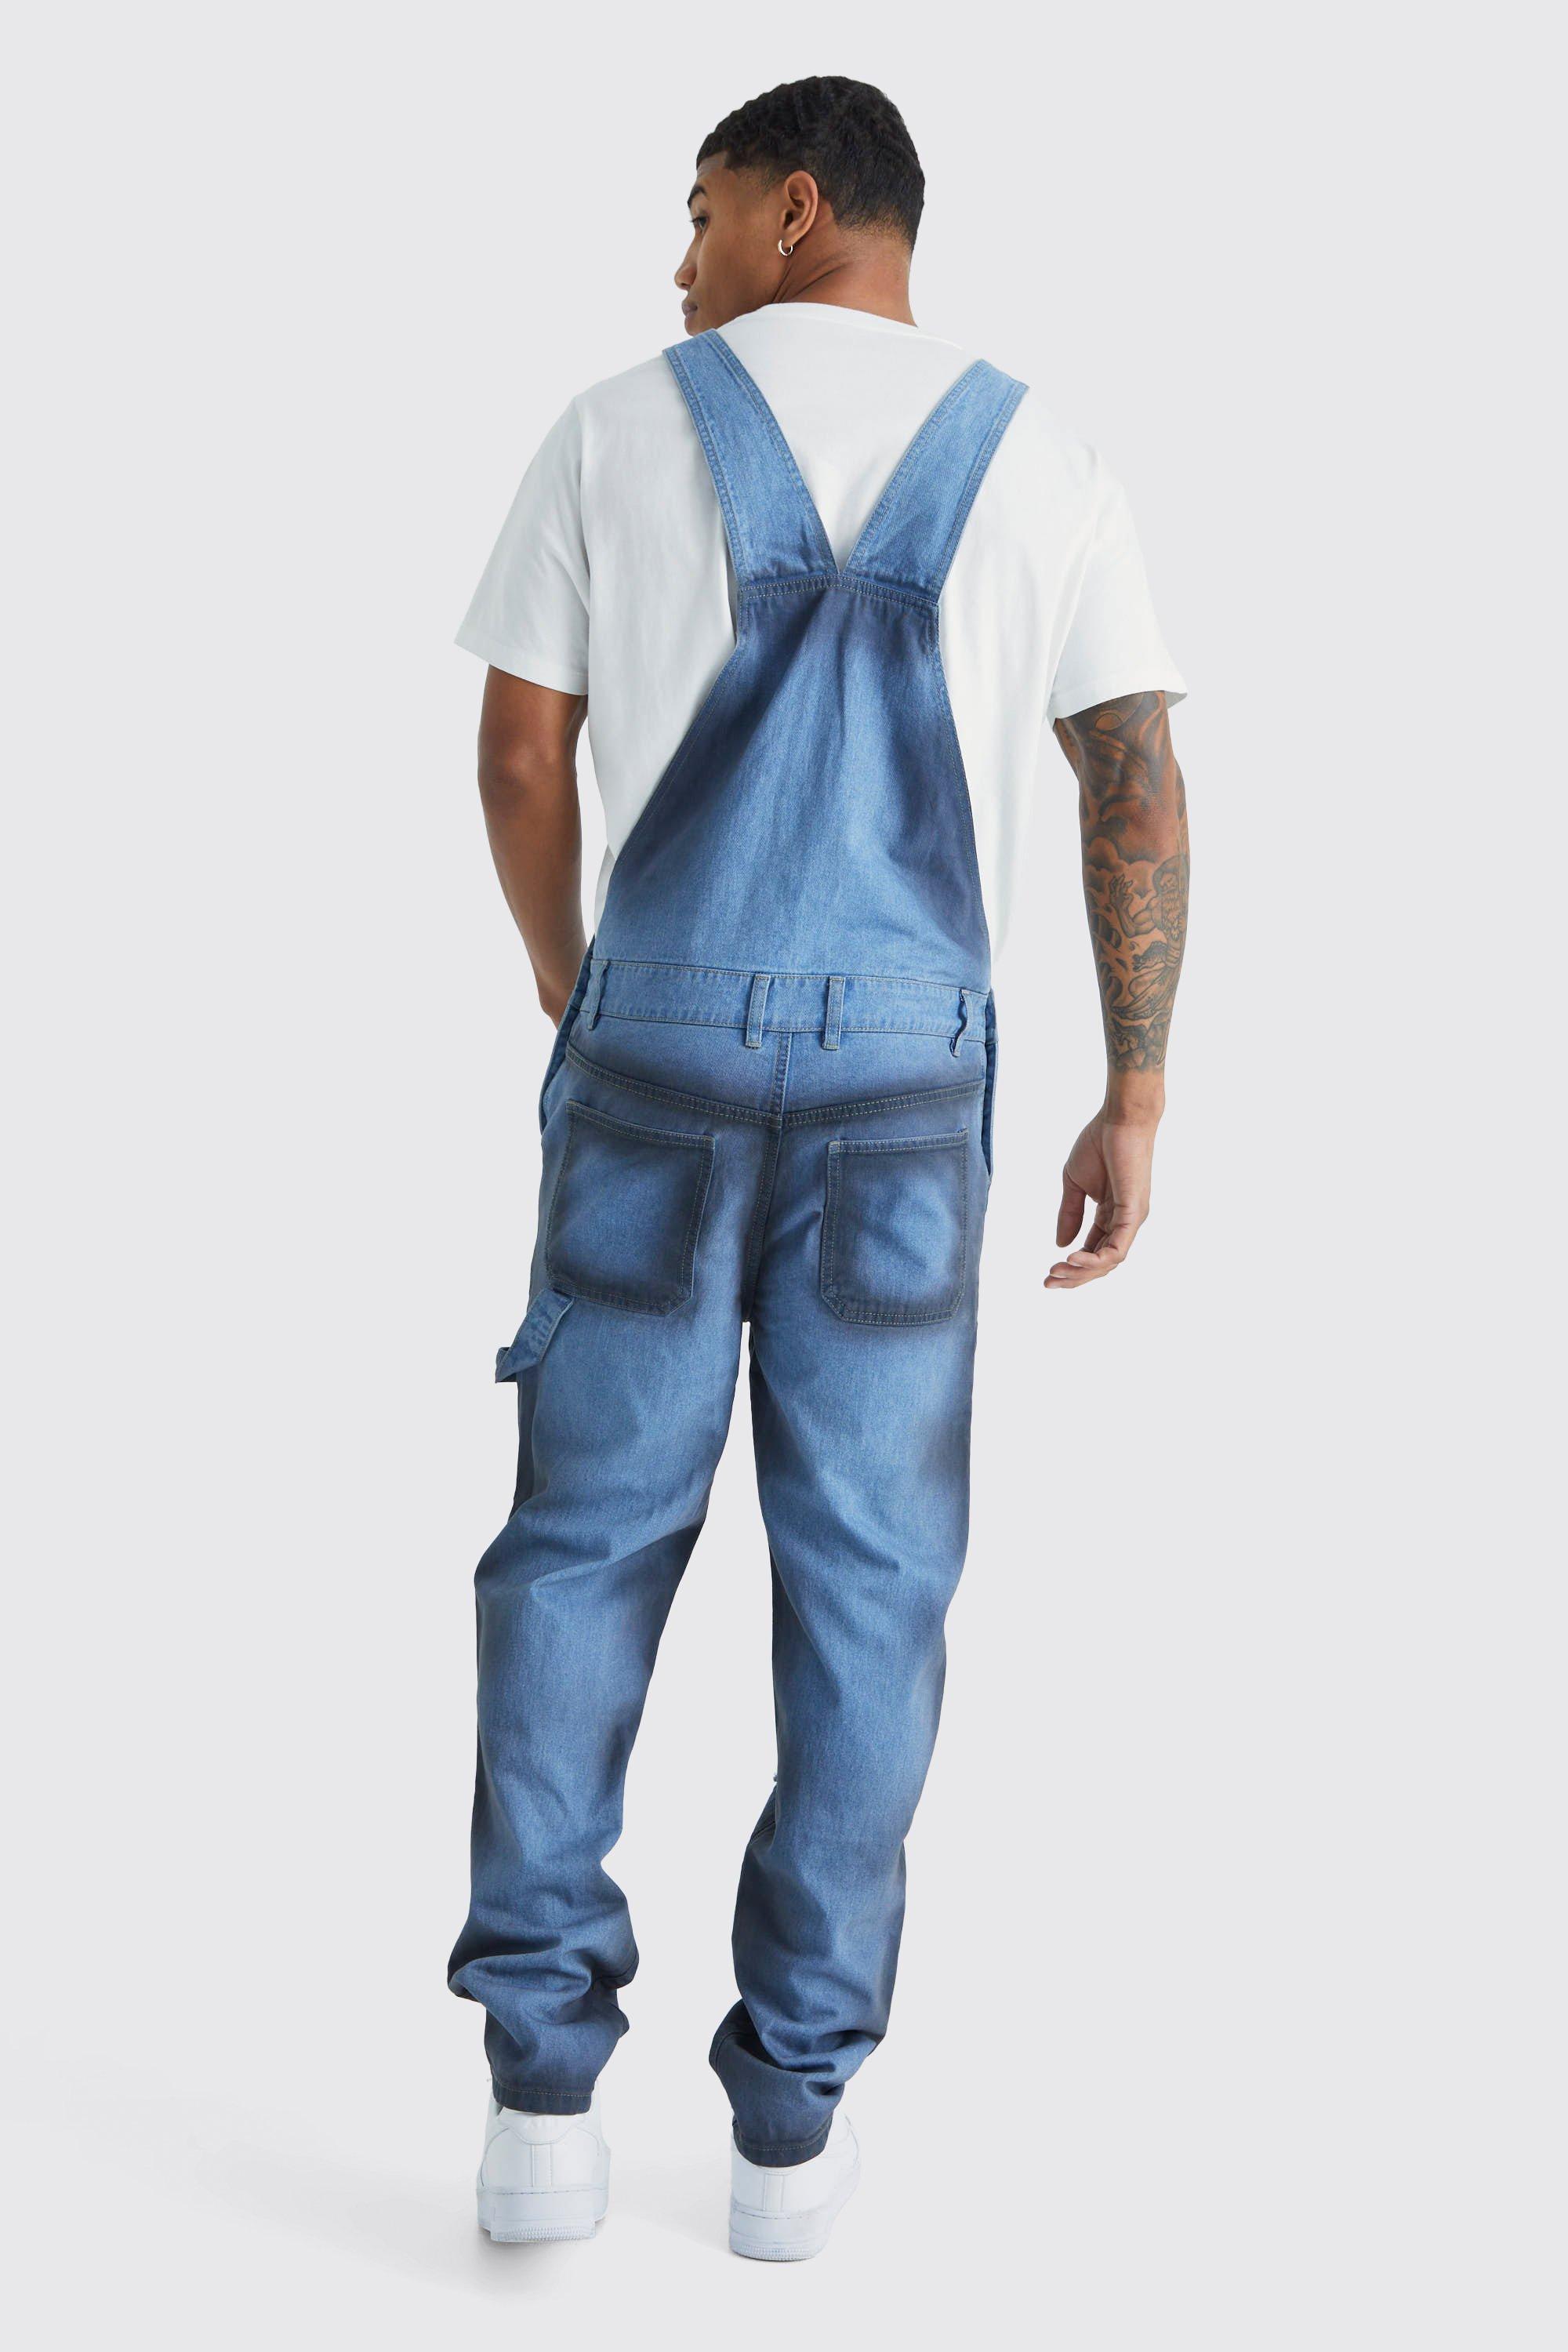 DIY, Custom Jaded Man TAPESTRY PATCH Denim Jeans